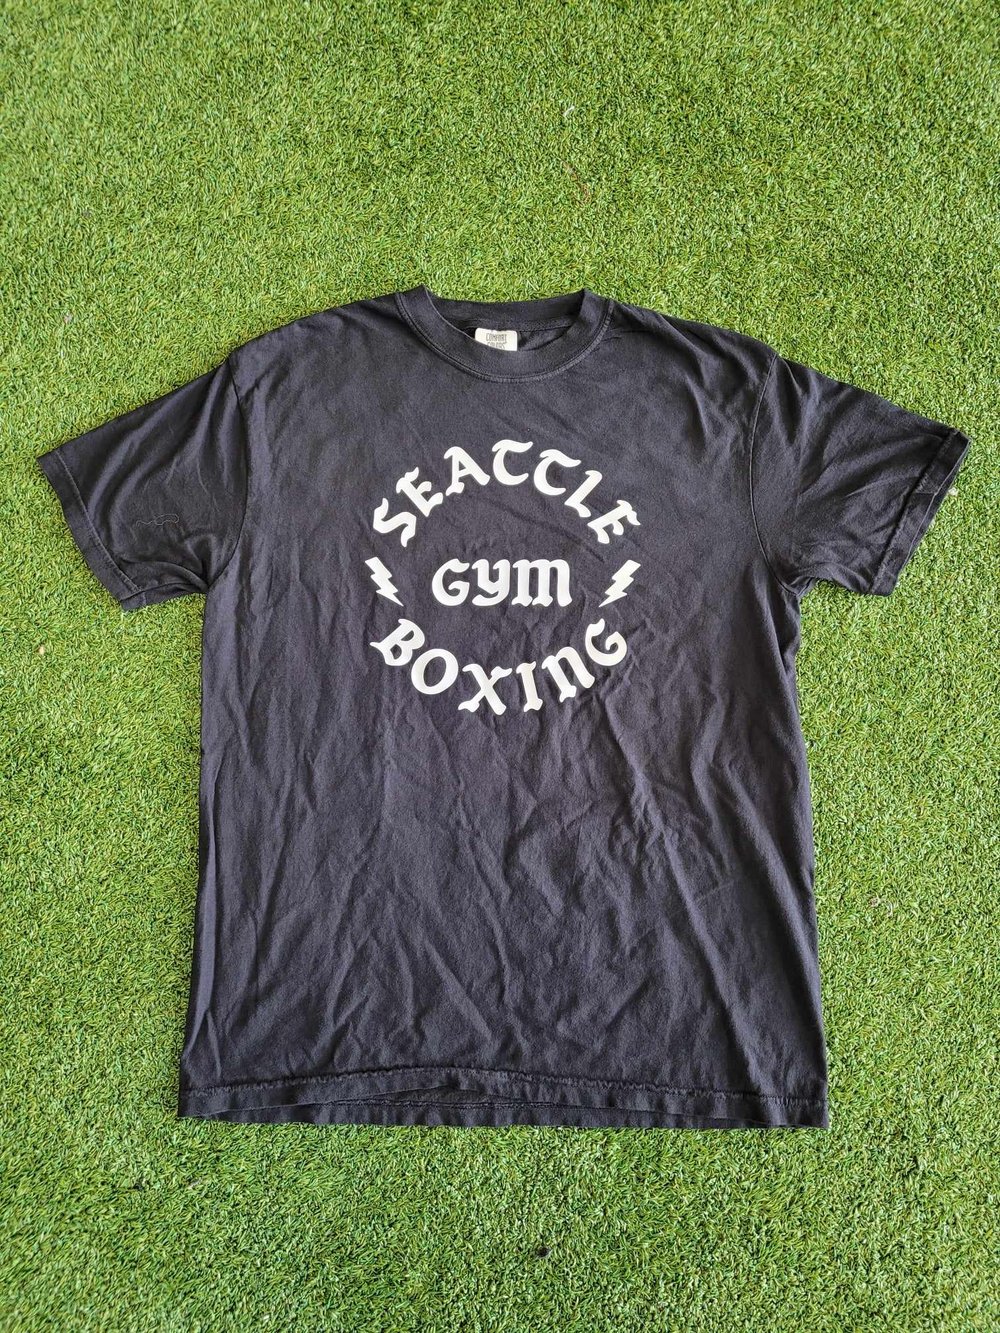 Black T-shirt w/ SBG Design